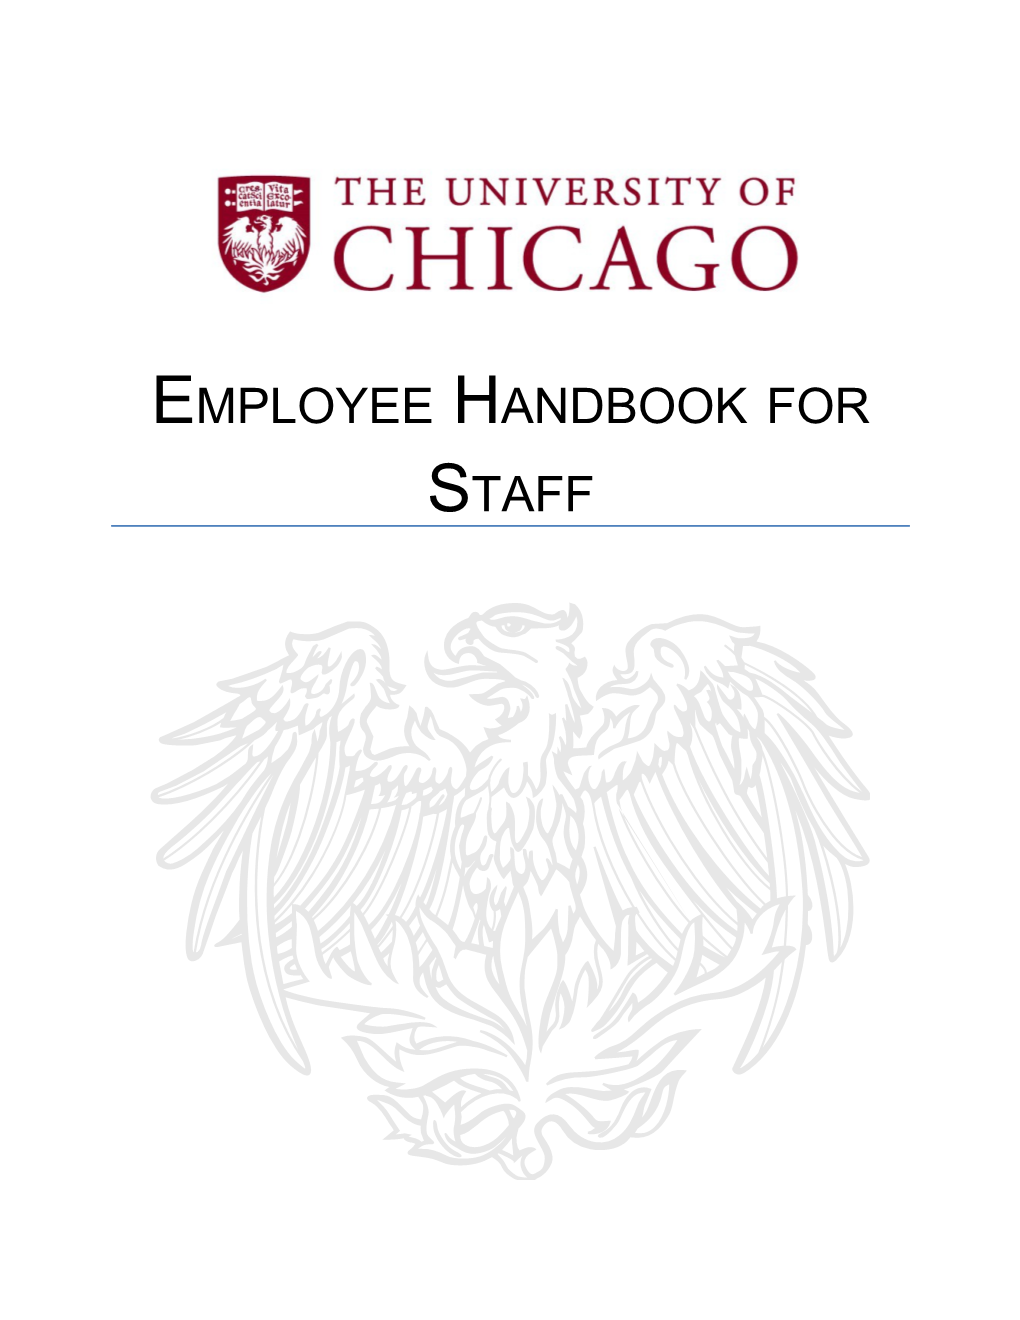 Employee Handbook for Staff